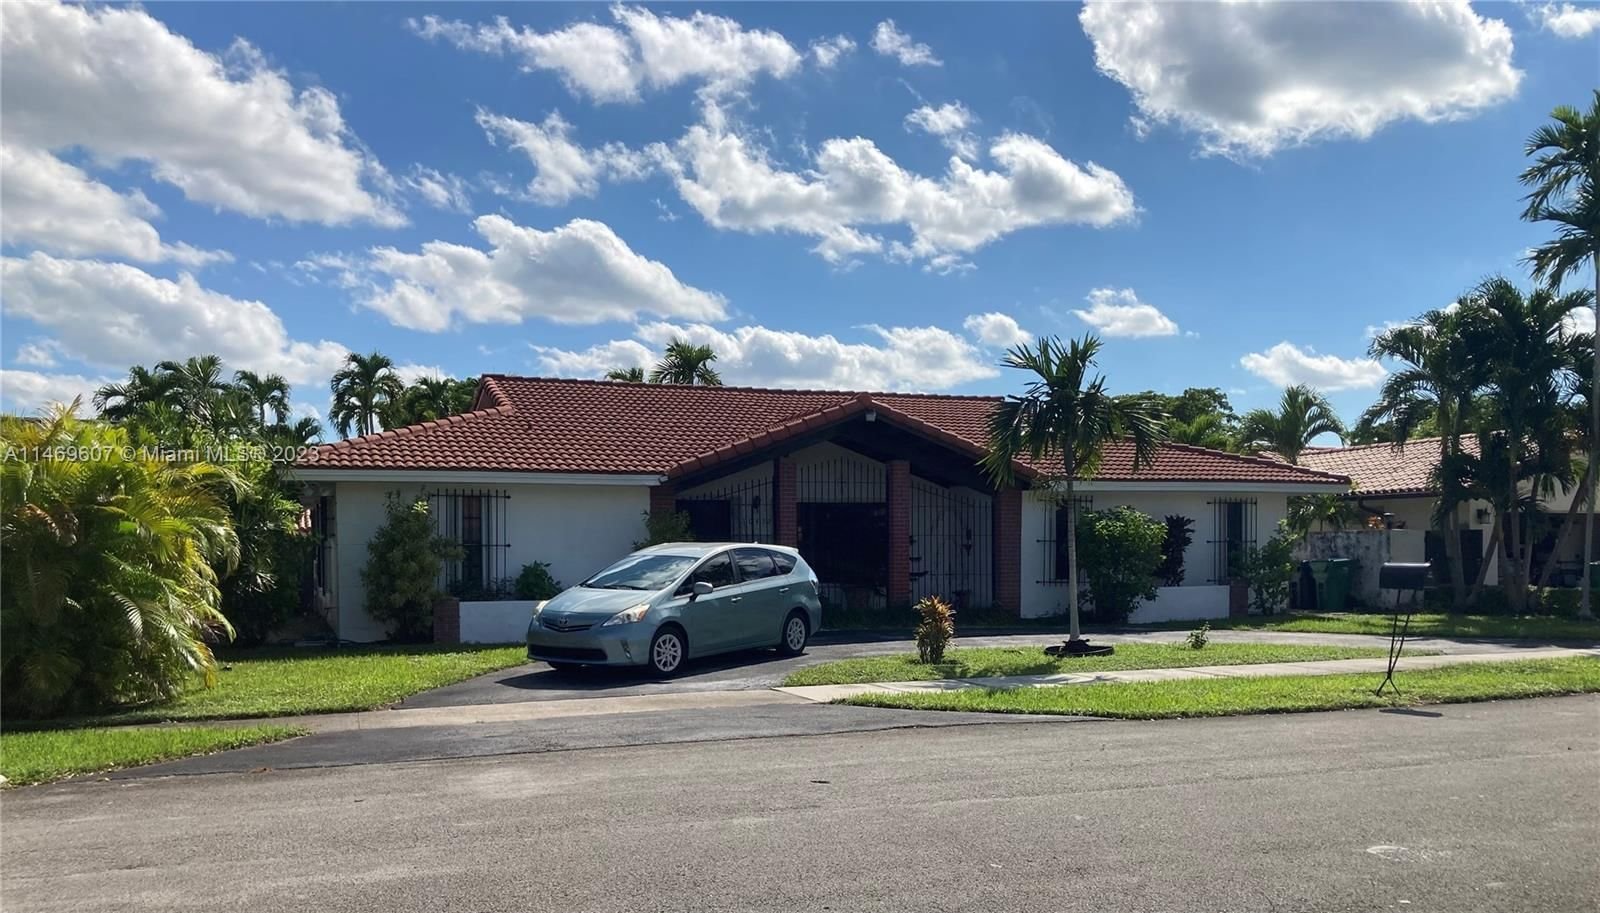 Real estate property located at 10452 21st St, Miami-Dade County, LOYOLA ESTATES, Miami, FL